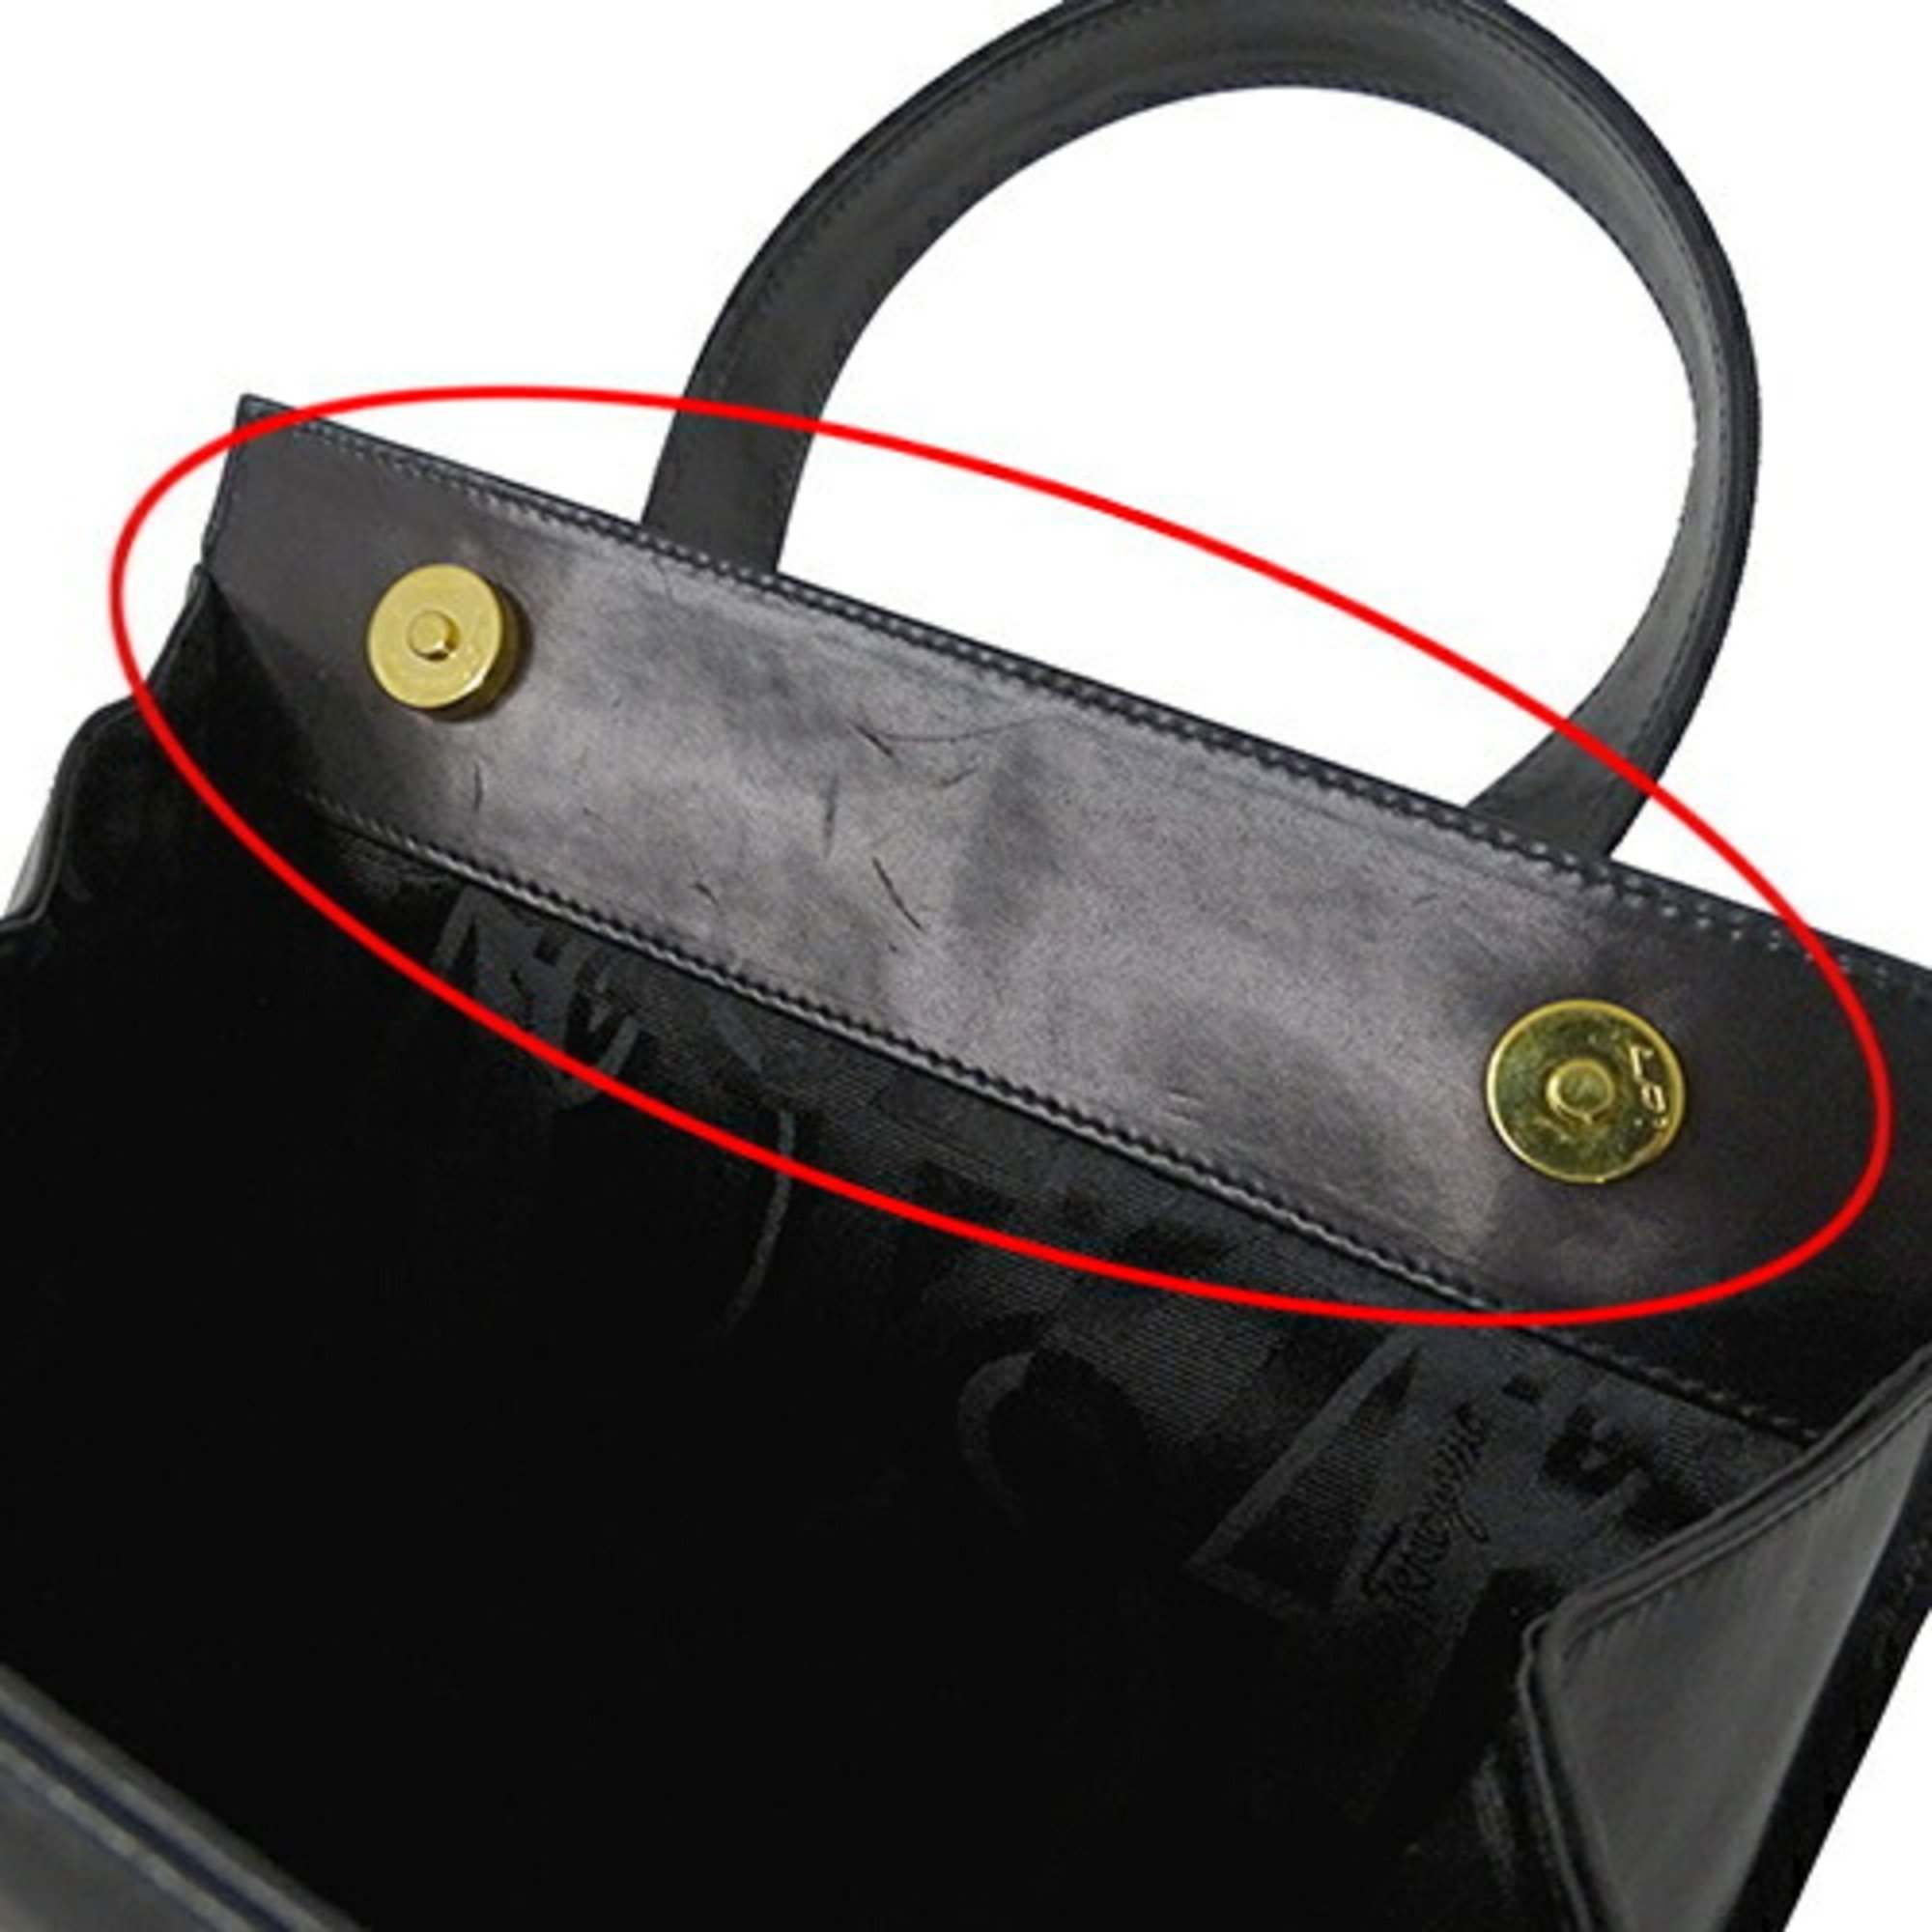 Salvatore Ferragamo Bag Women's Handbag Shoulder 2way Rose Ribbon Leather Black